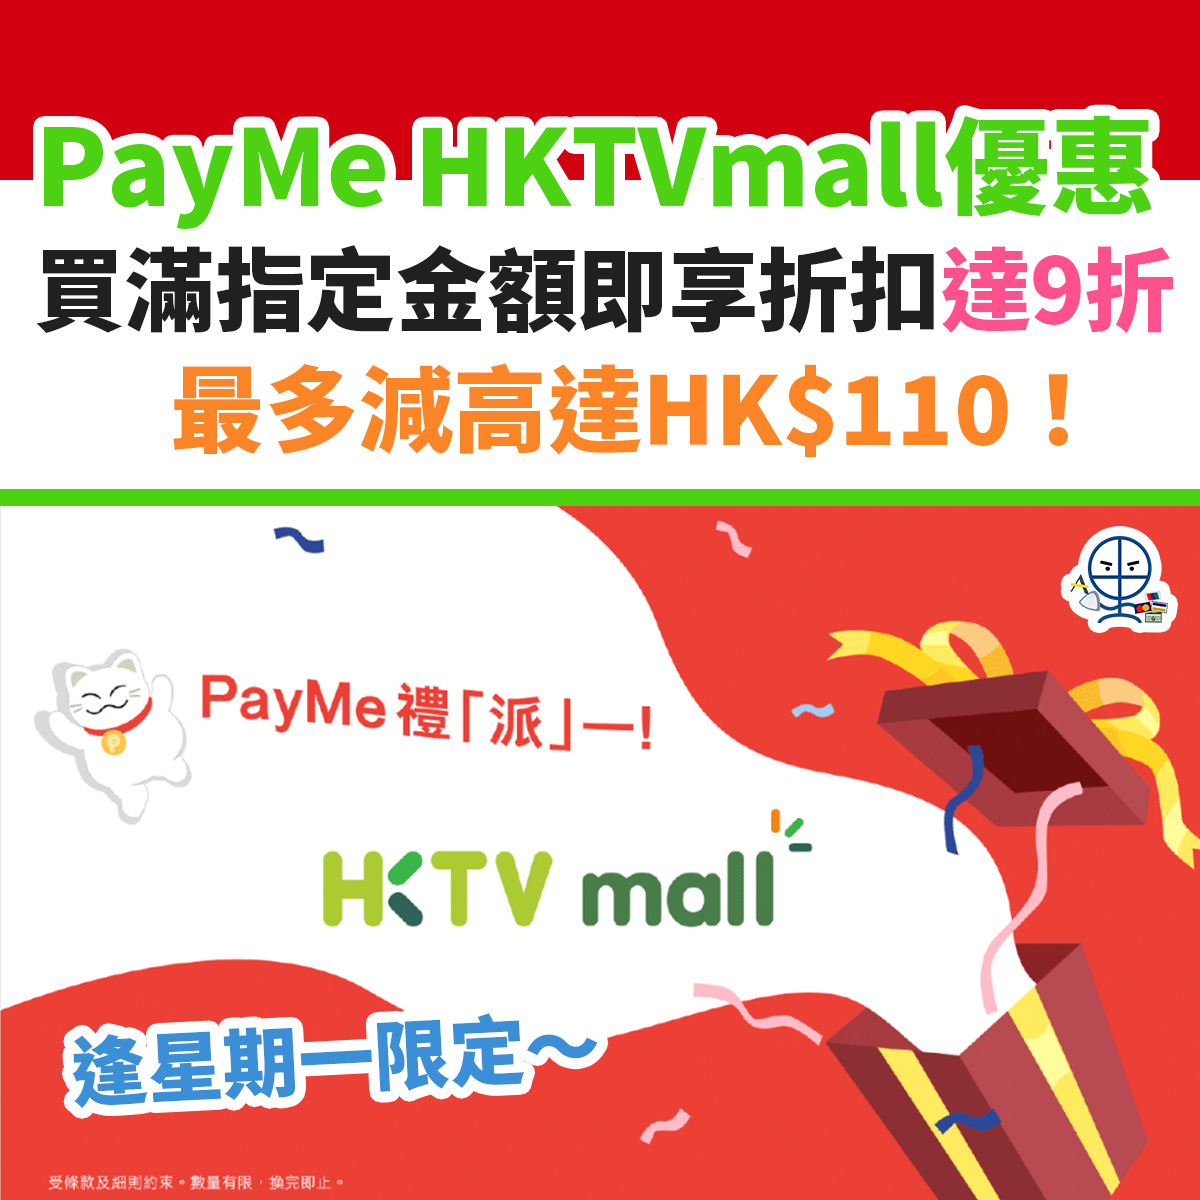 HKTVMALL-PAYME-信用卡－優惠